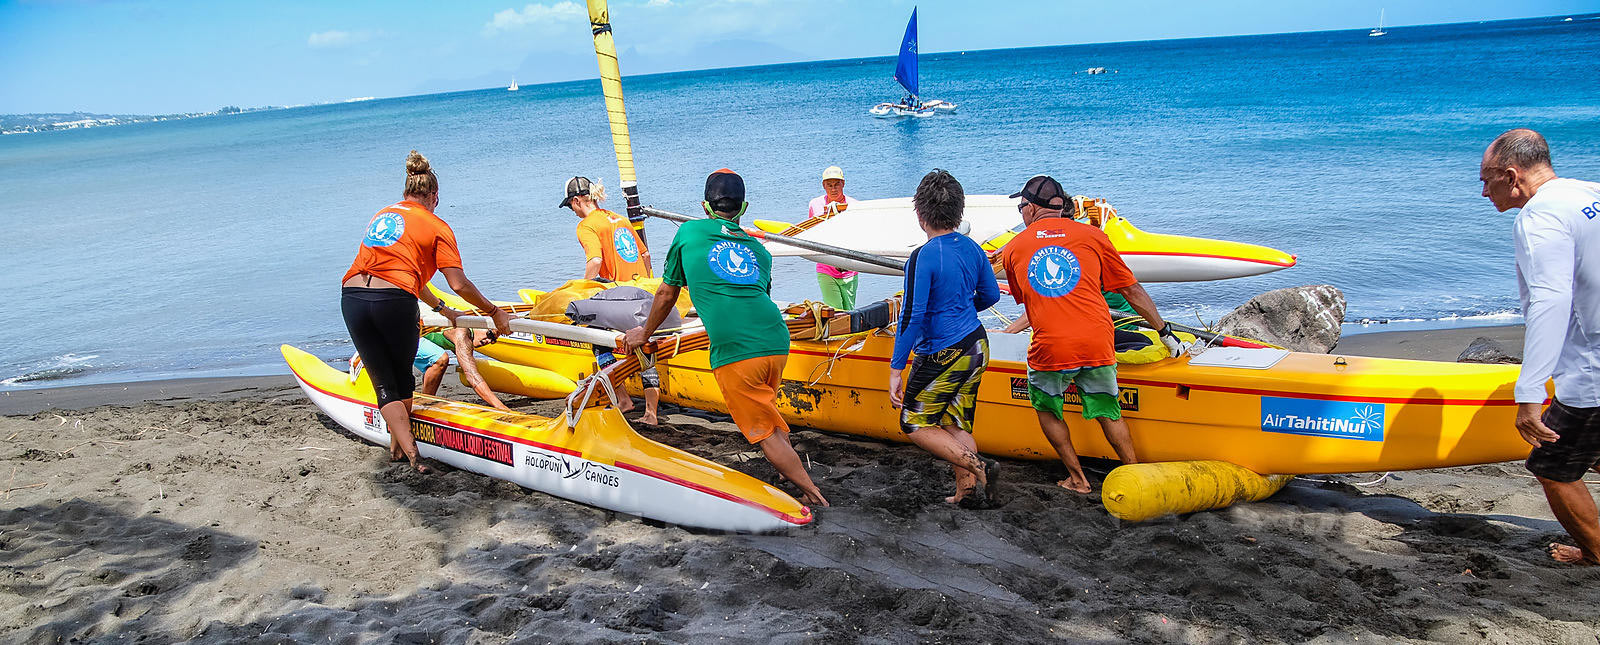 Holopuni is a traditiional sailing canoe from Tahiti